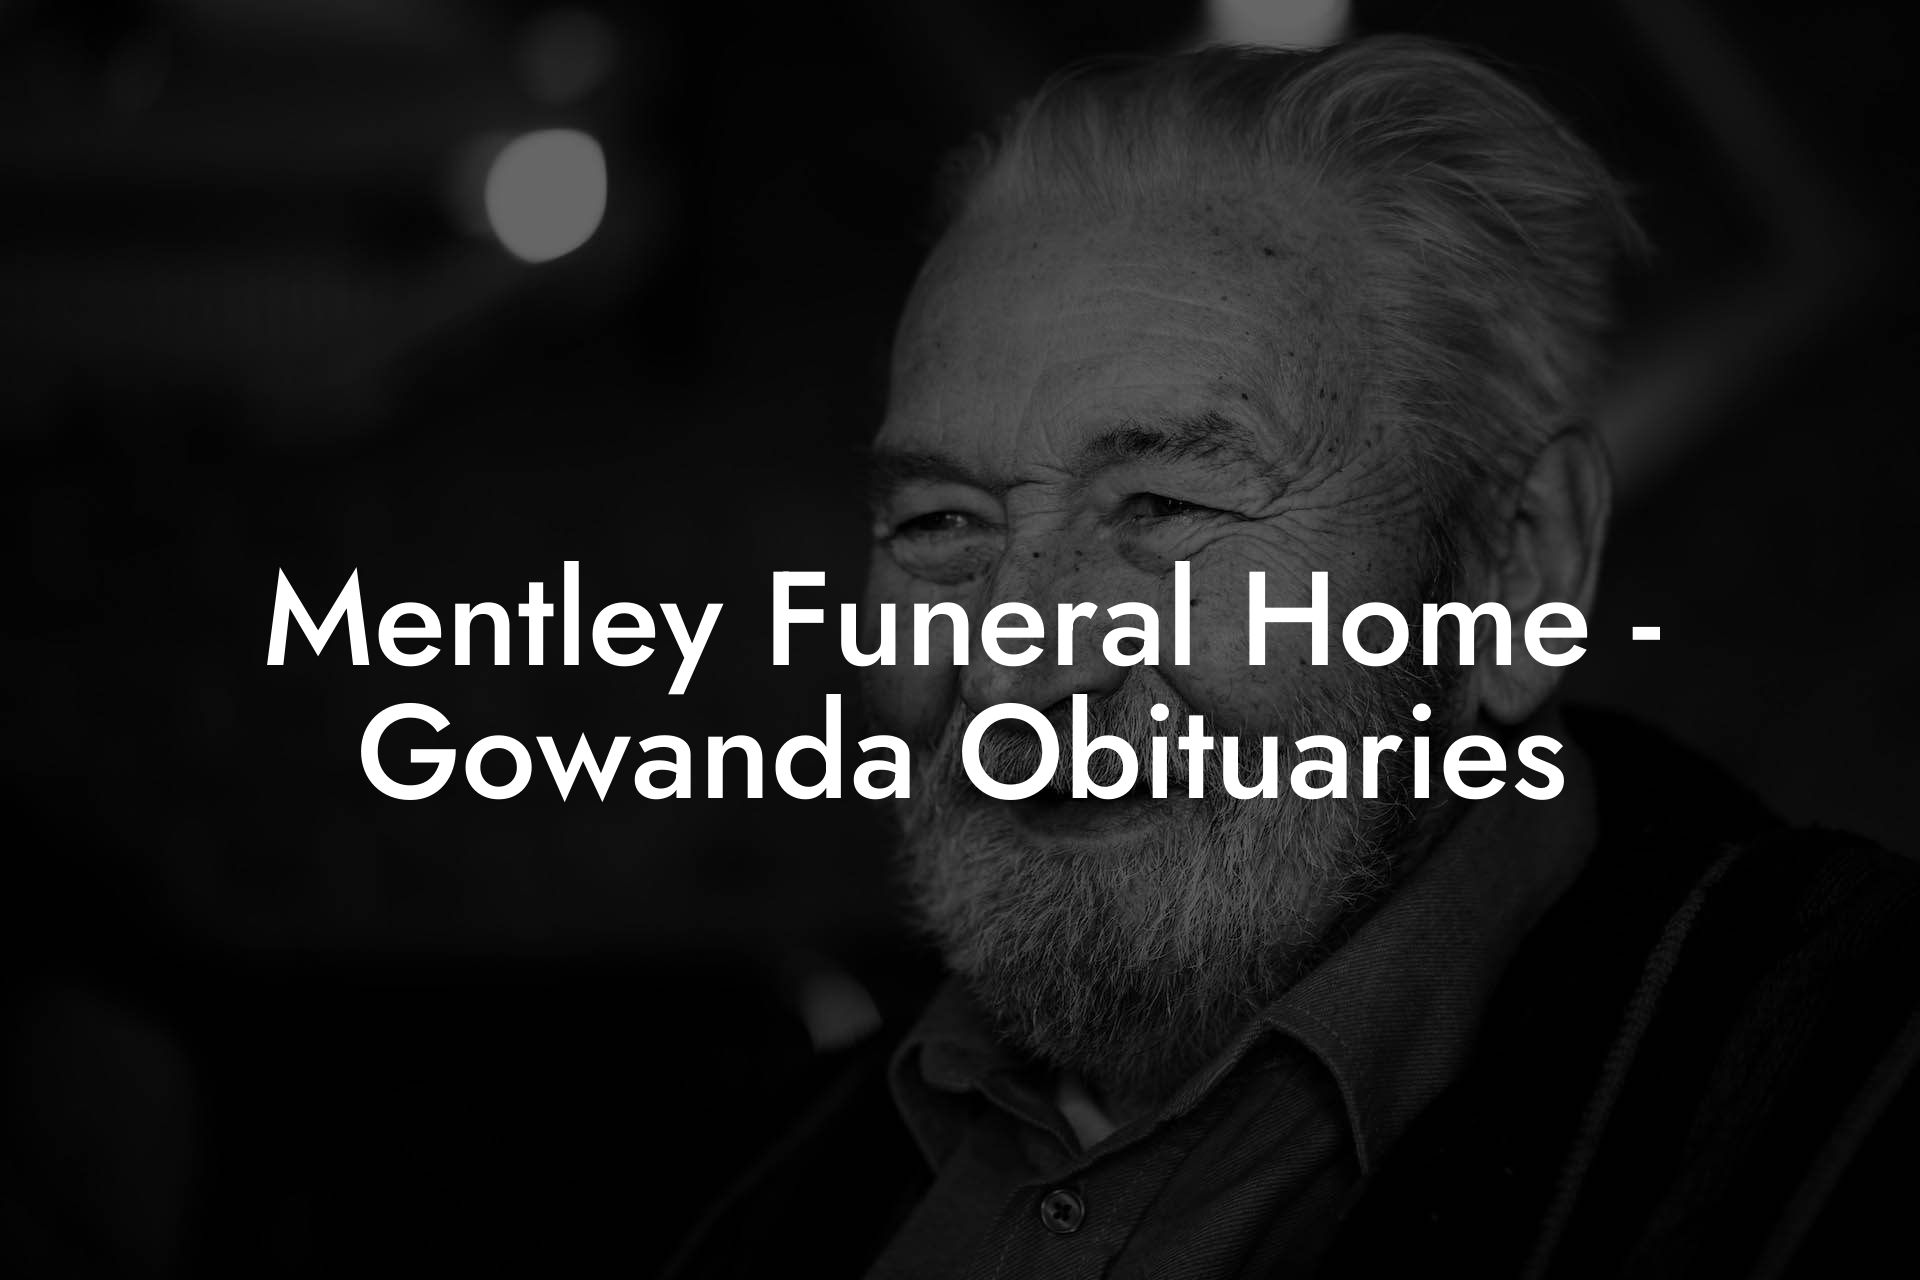 Mentley Funeral Home - Gowanda Obituaries